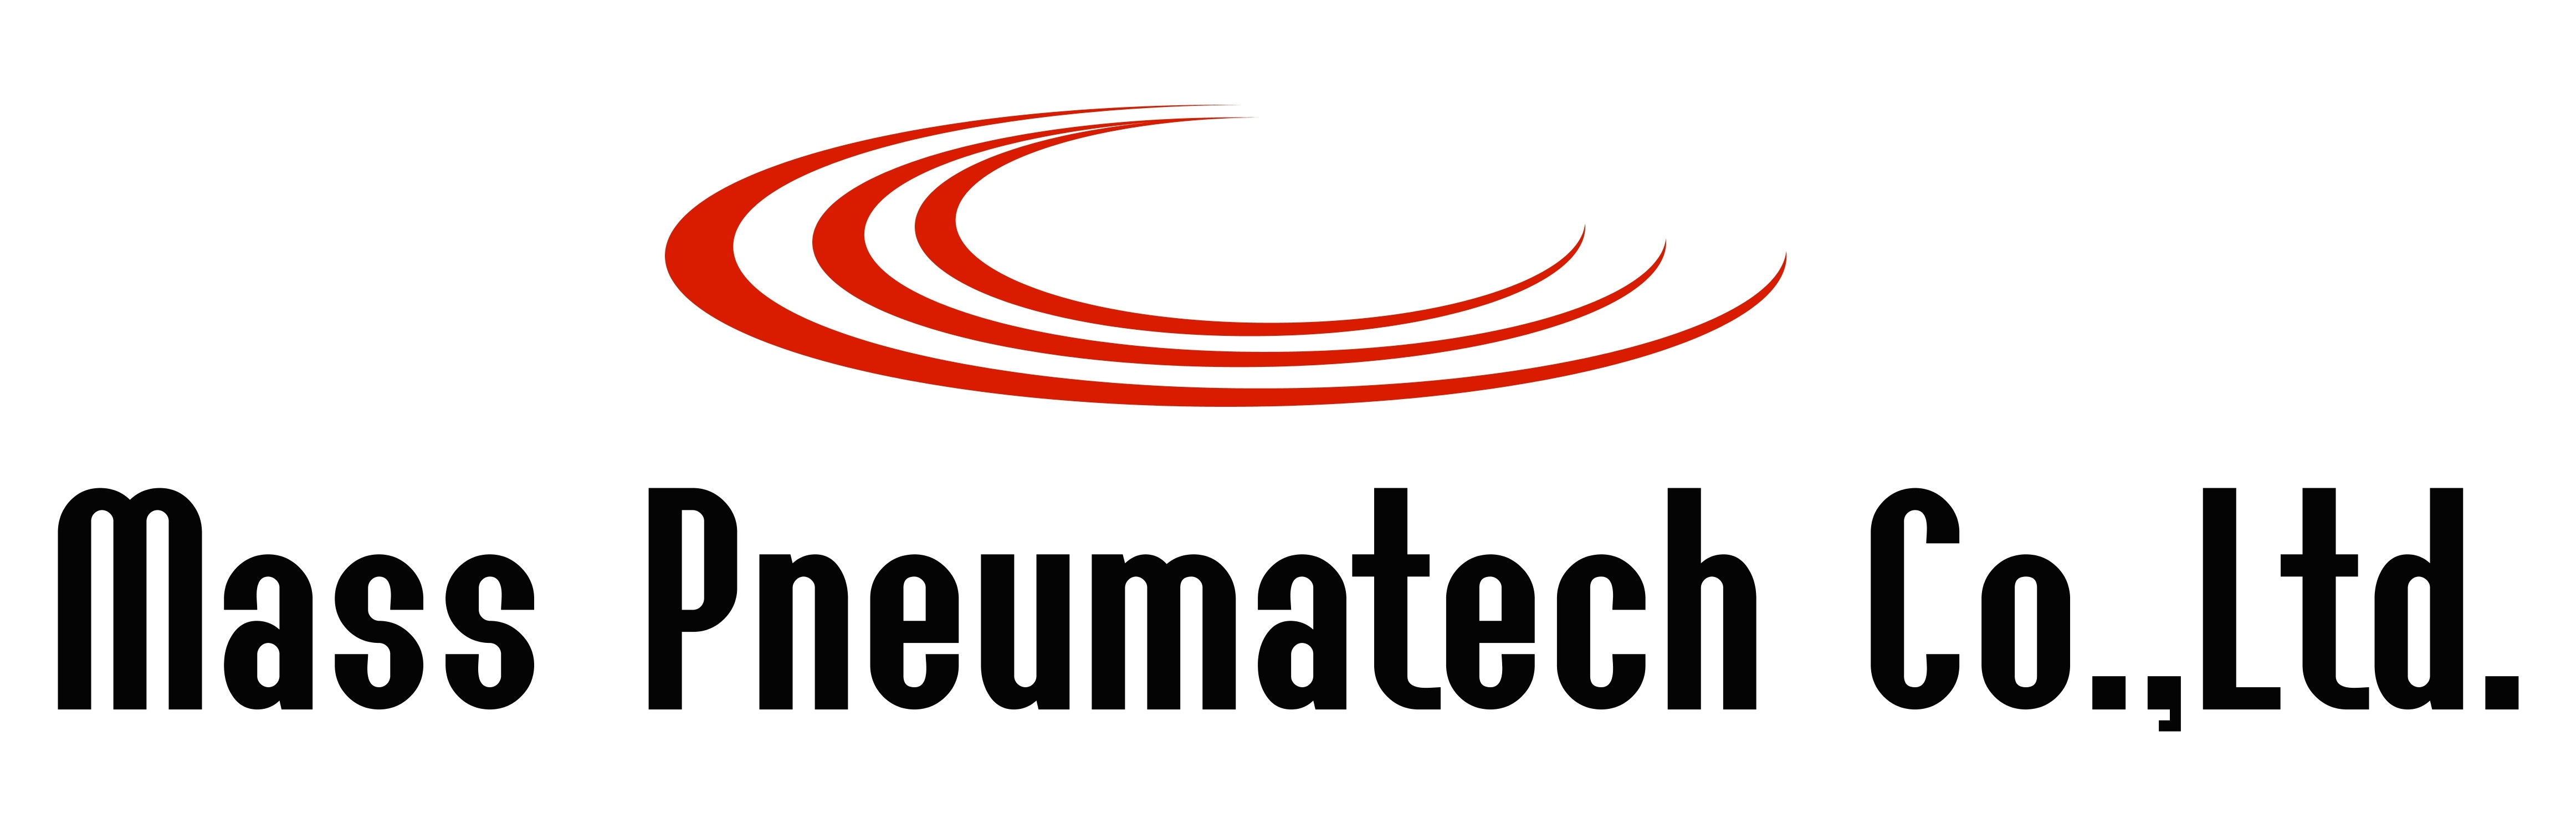 Mass Pneumatech Co.,Ltd., บริษัท แมส นิวมาเทค จำกัด